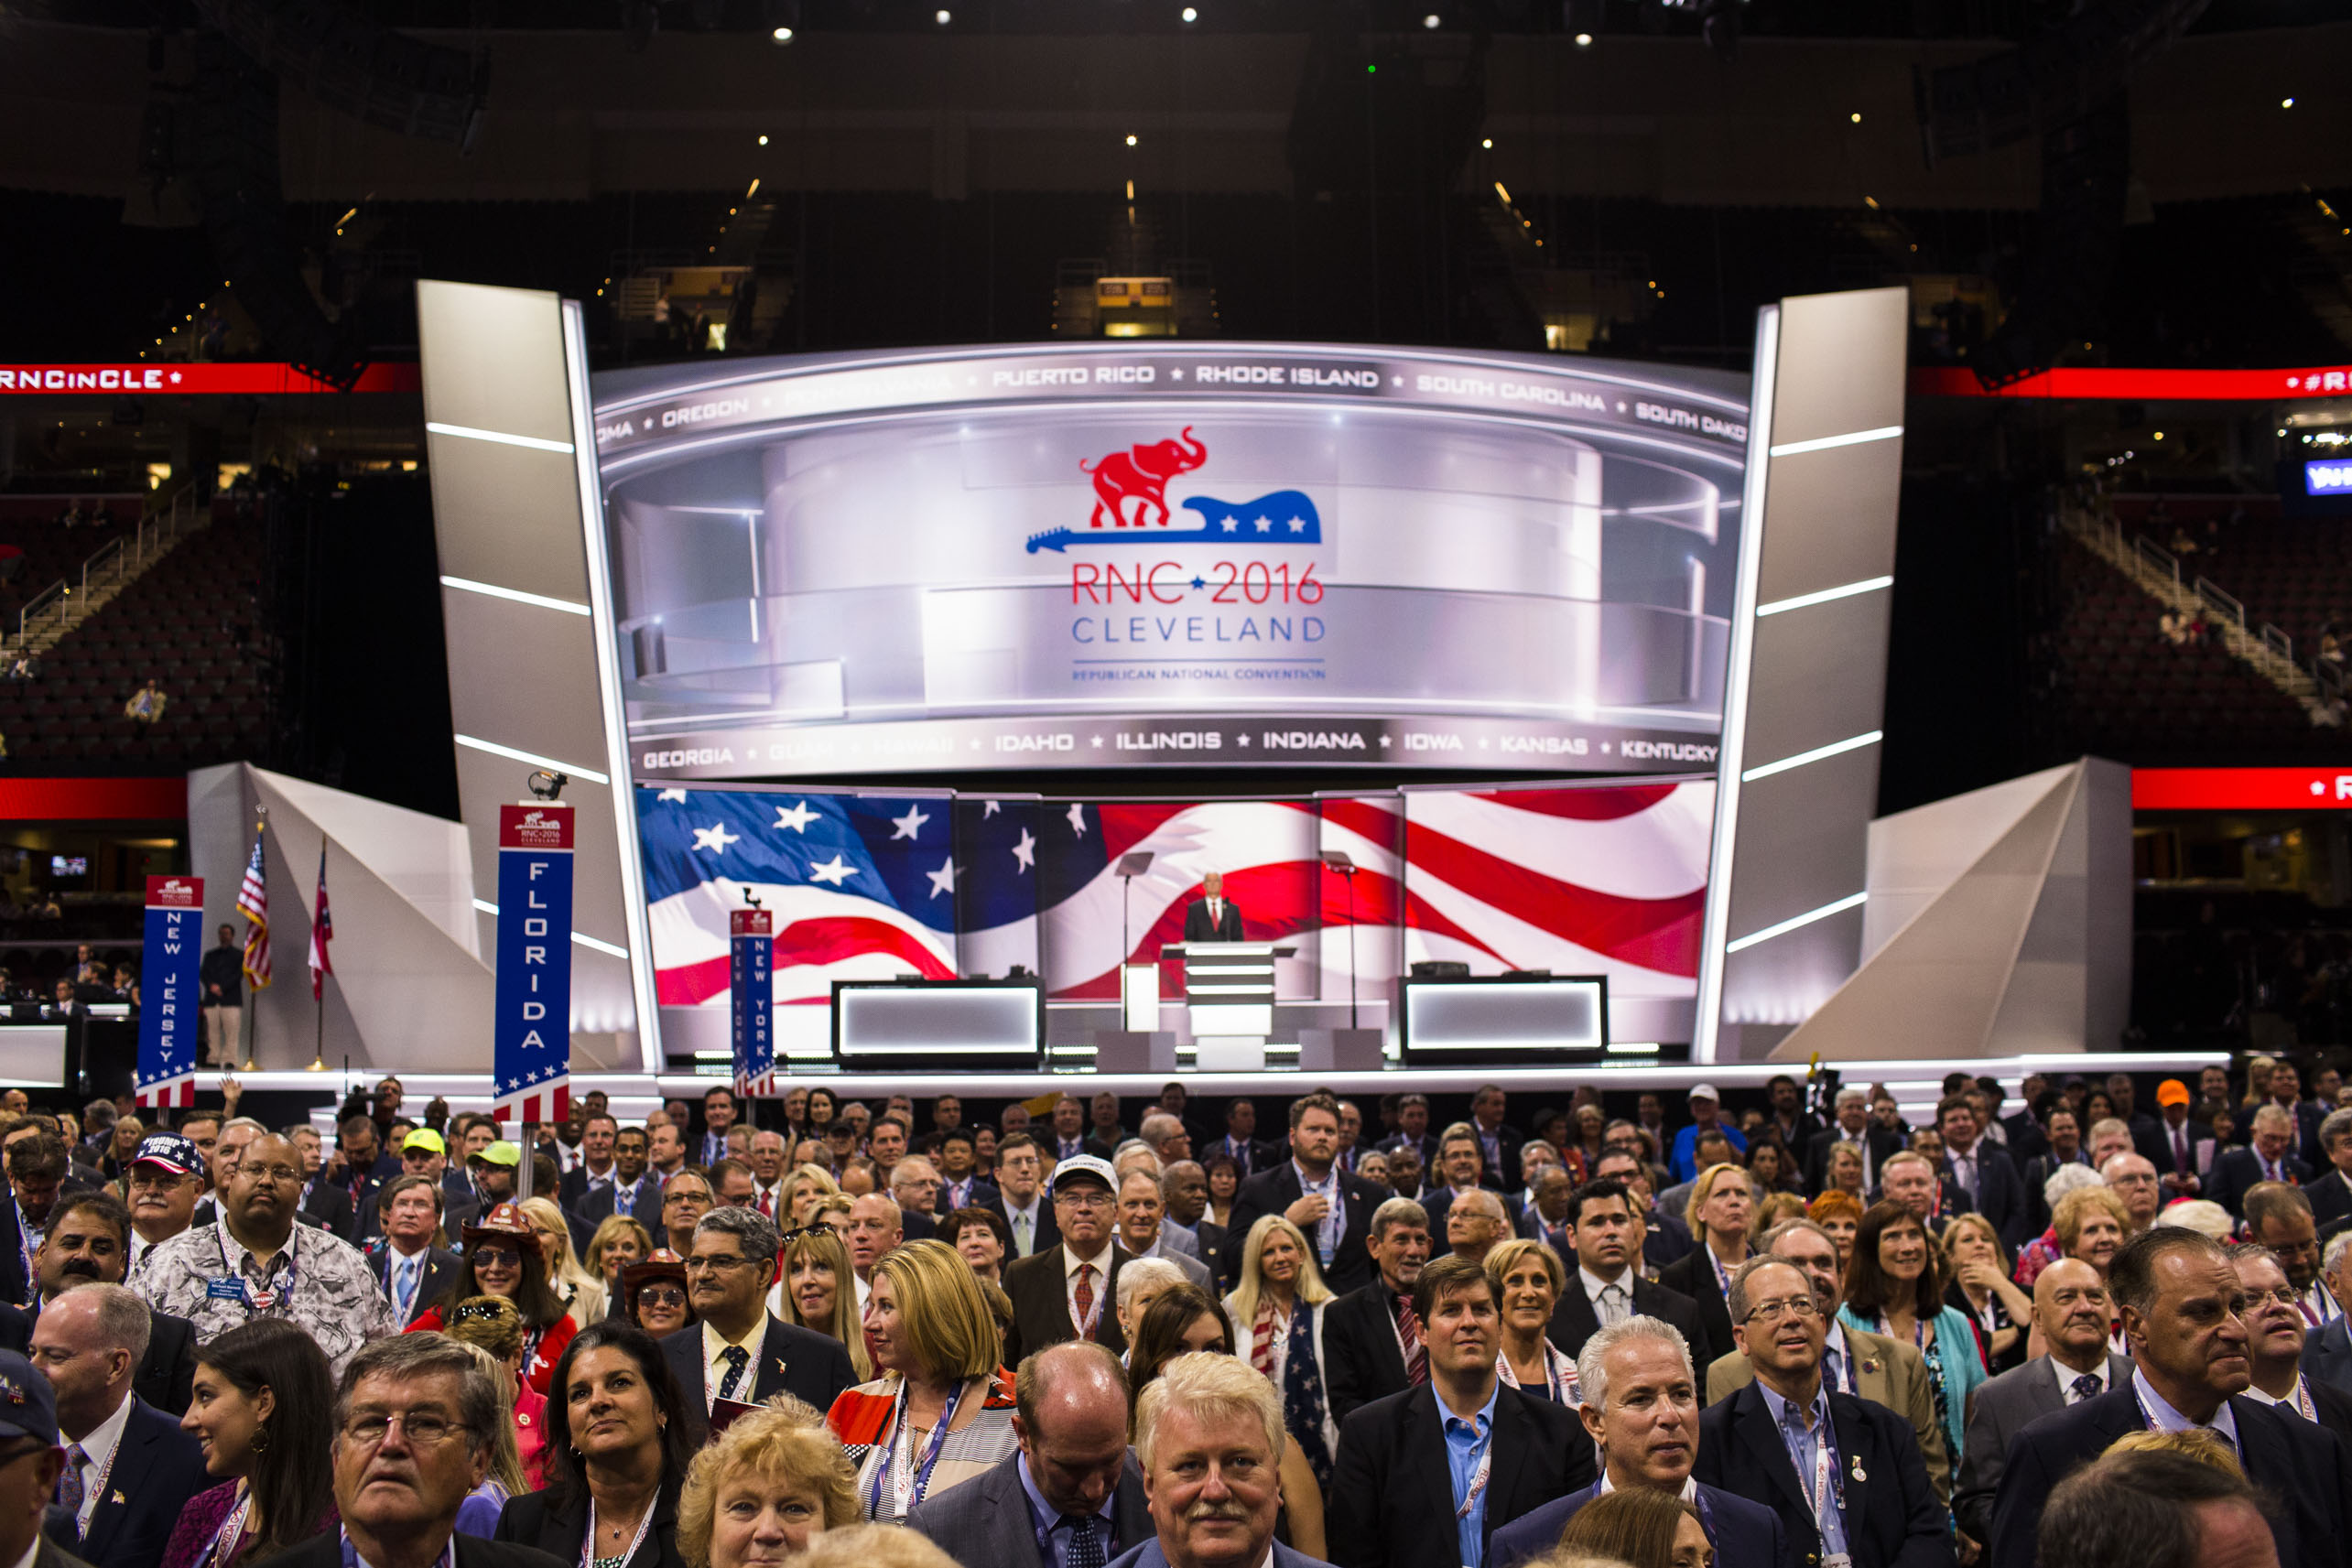 2016 Republican National Convention Rhode Island Delegate Button Donald Trump 